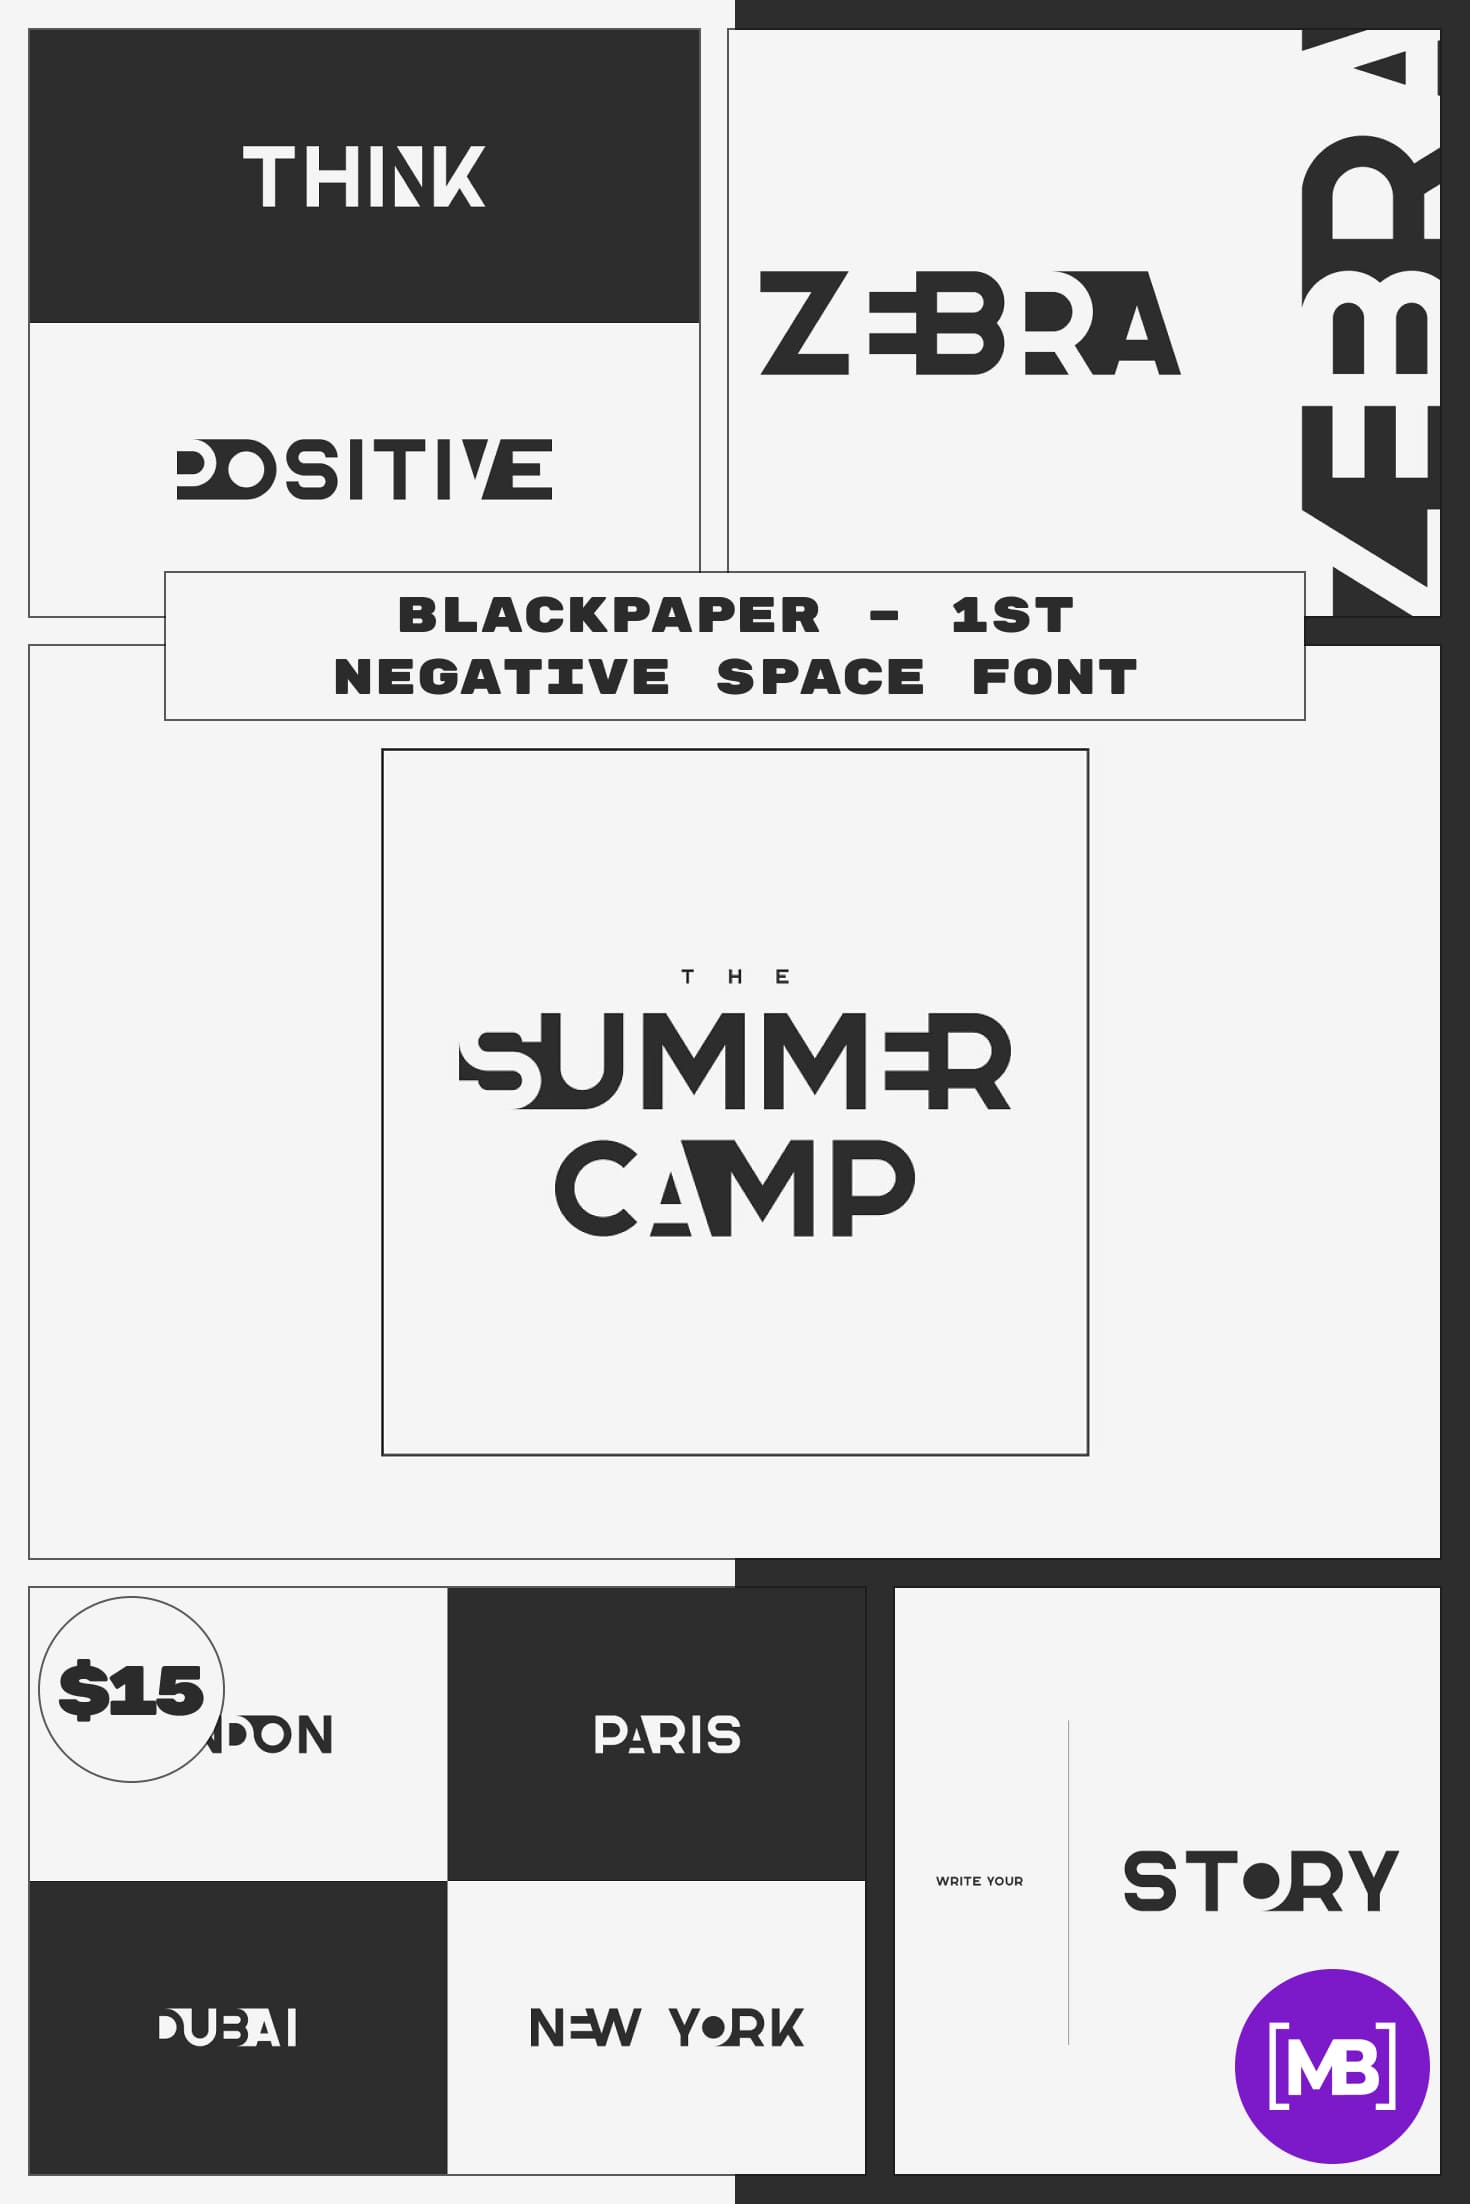 Blackpaper - 1st Negative Space Font. Collage Image.